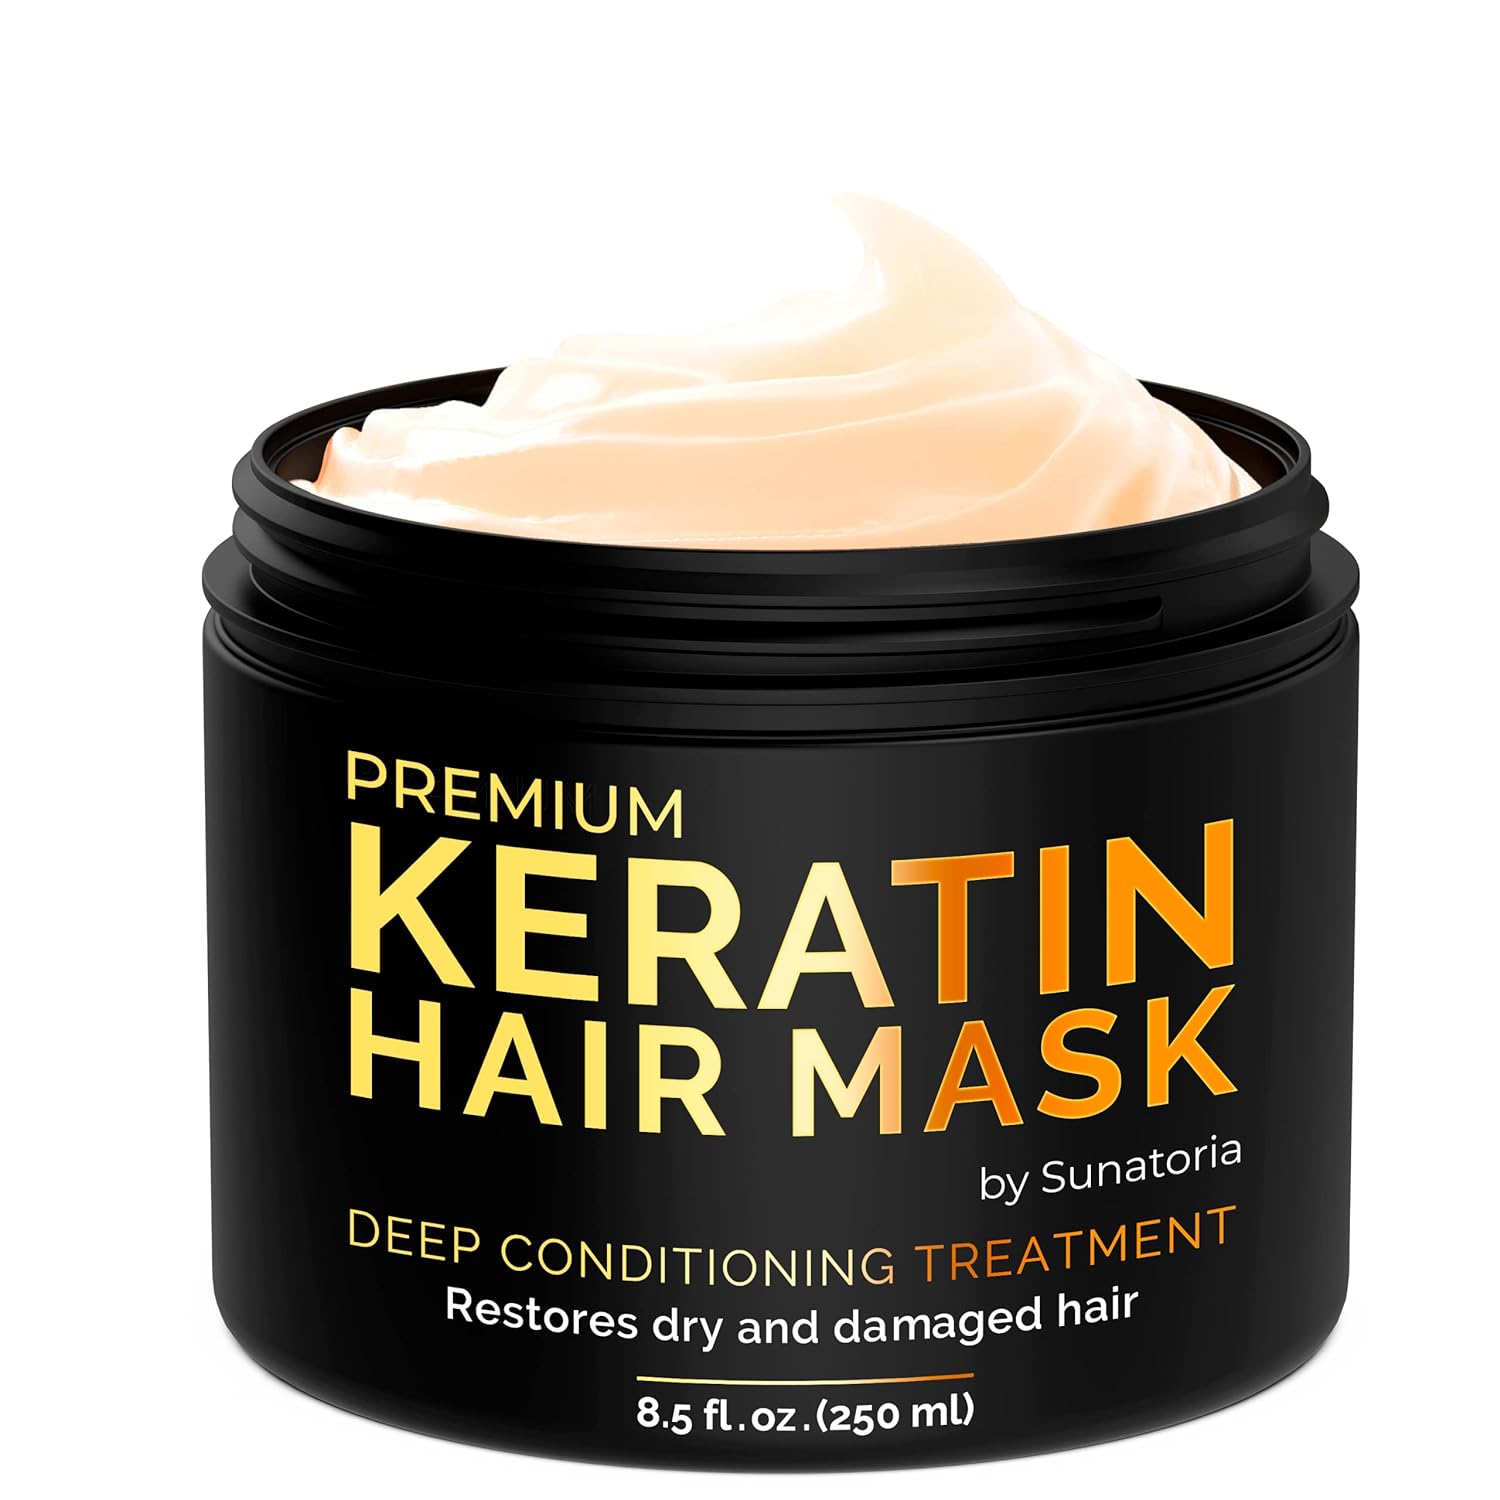 Premium Keratin Hair Mask